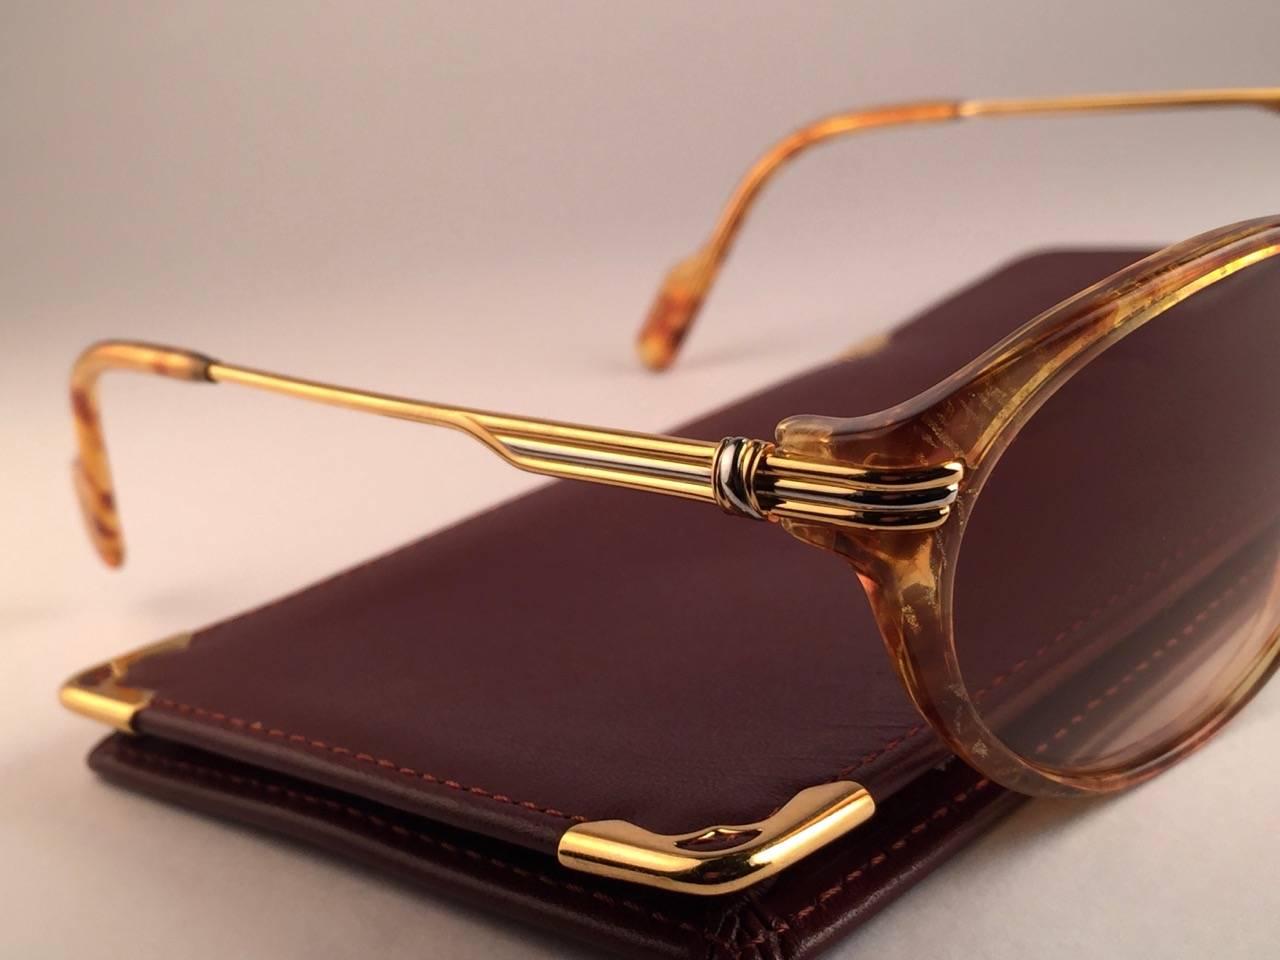  Cartier Aurore Jaspe Gold Sunglasses Brown France 18k Gold 1991 2